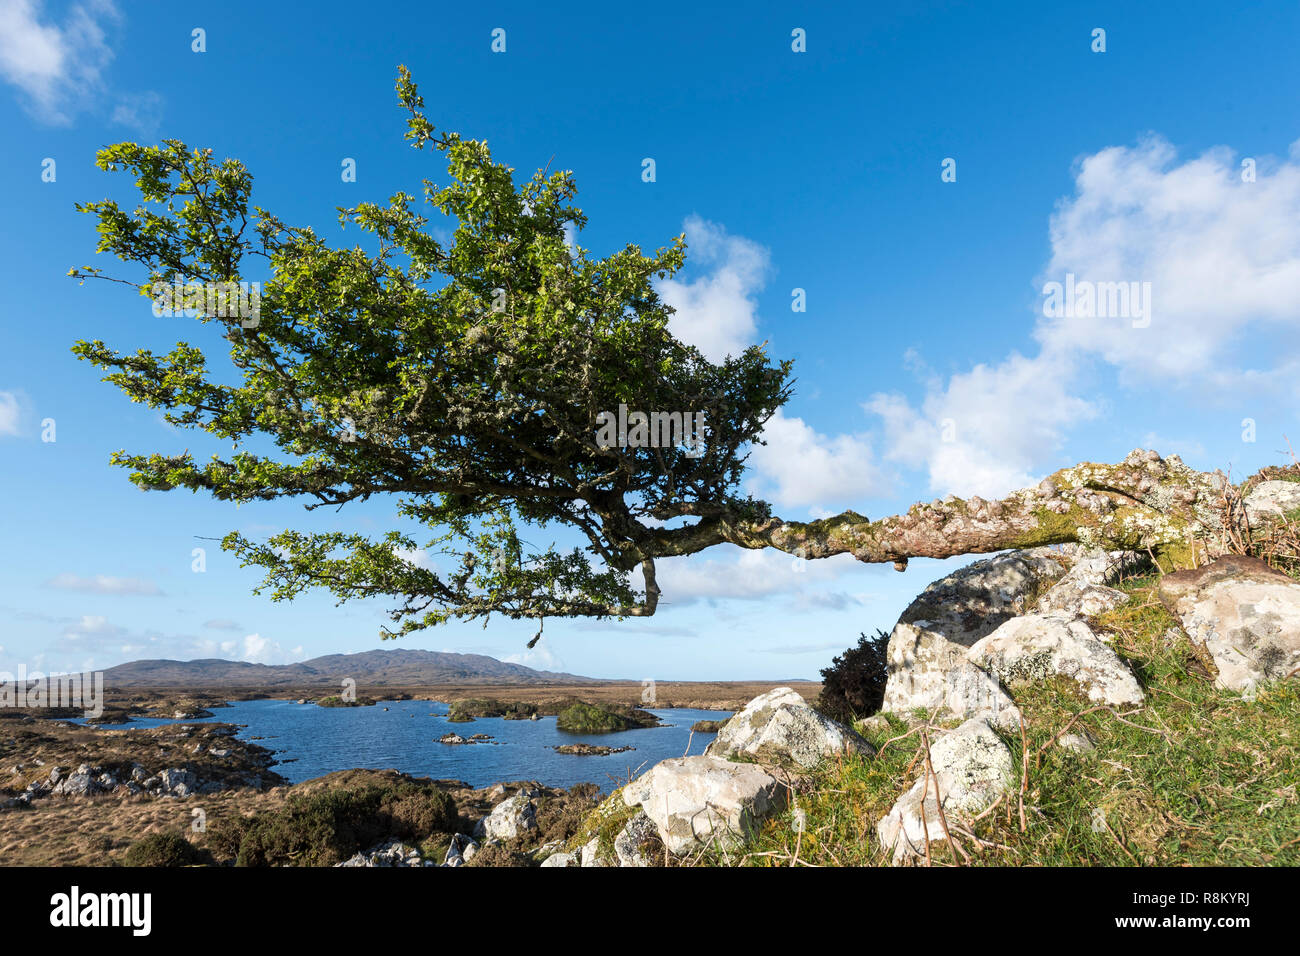 Ireland, County Galway, Connemara, tree, lake and bog, Errisbeg mountain in the background Stock Photo